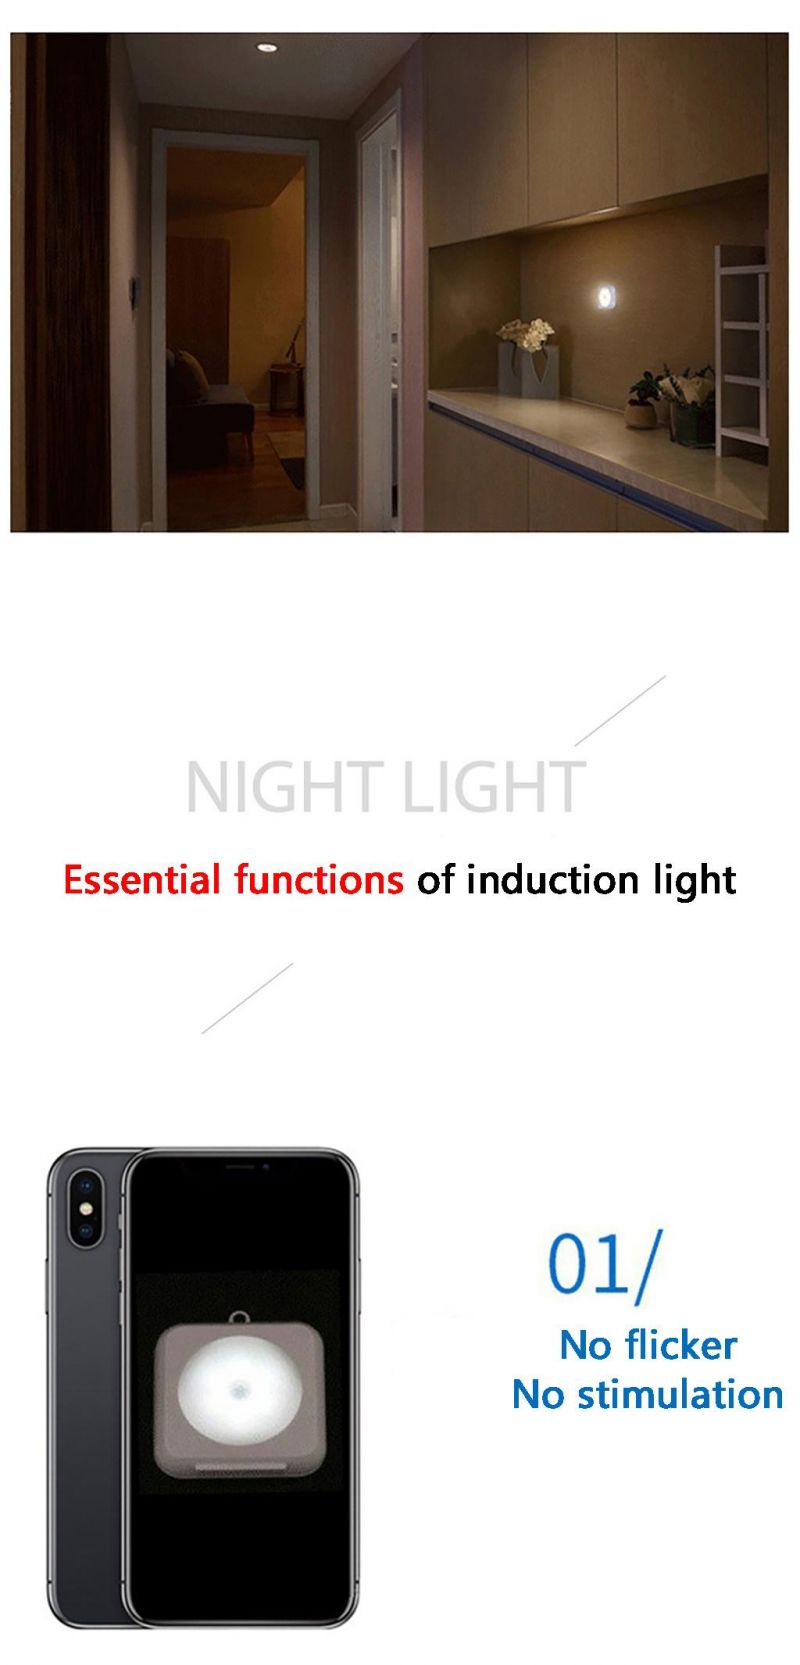 AAA Battery Human Induction + Light Control Square Smart Sensor Night Light